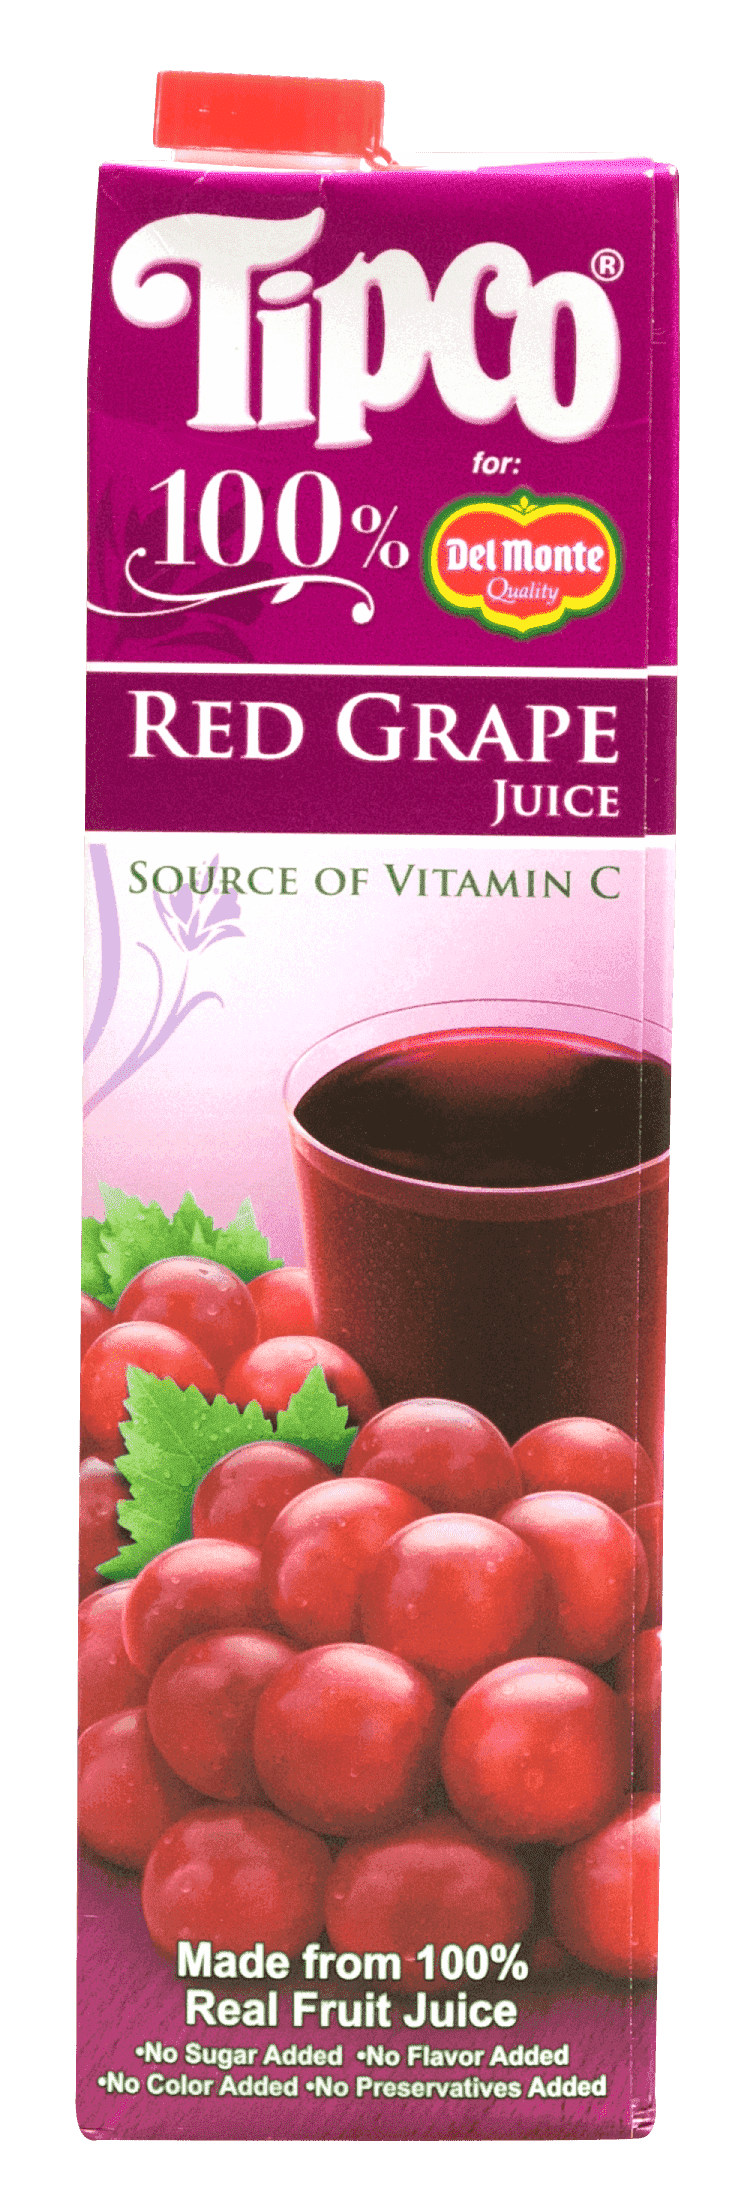 Tipco 100% Red Grape Juice